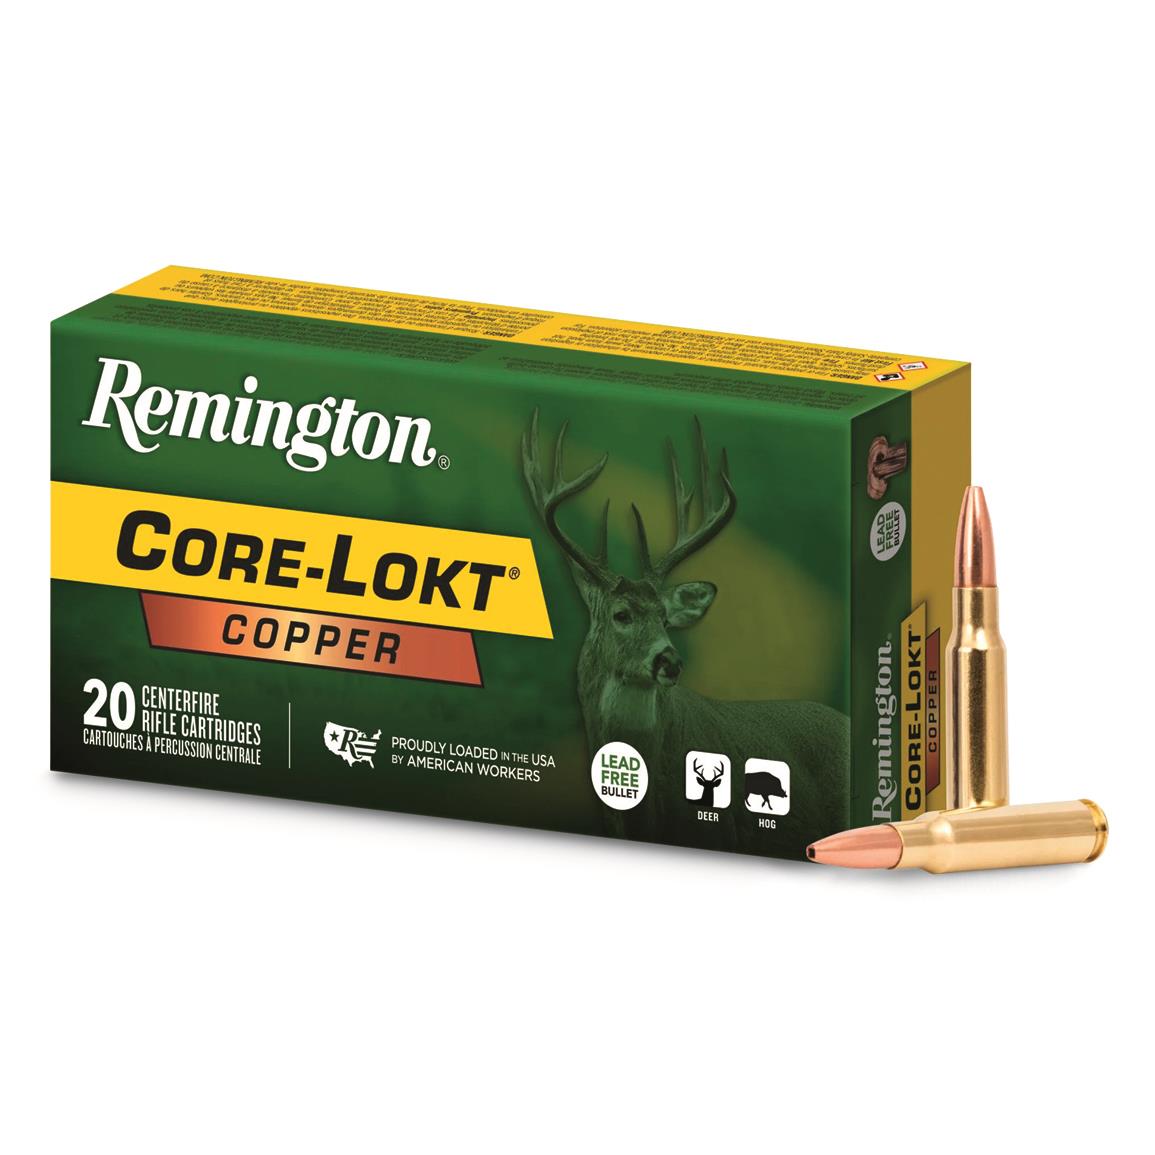 Remington Core-Lokt Copper, .308 Winchester, Copper HP, 150 Grain, 20 Rounds